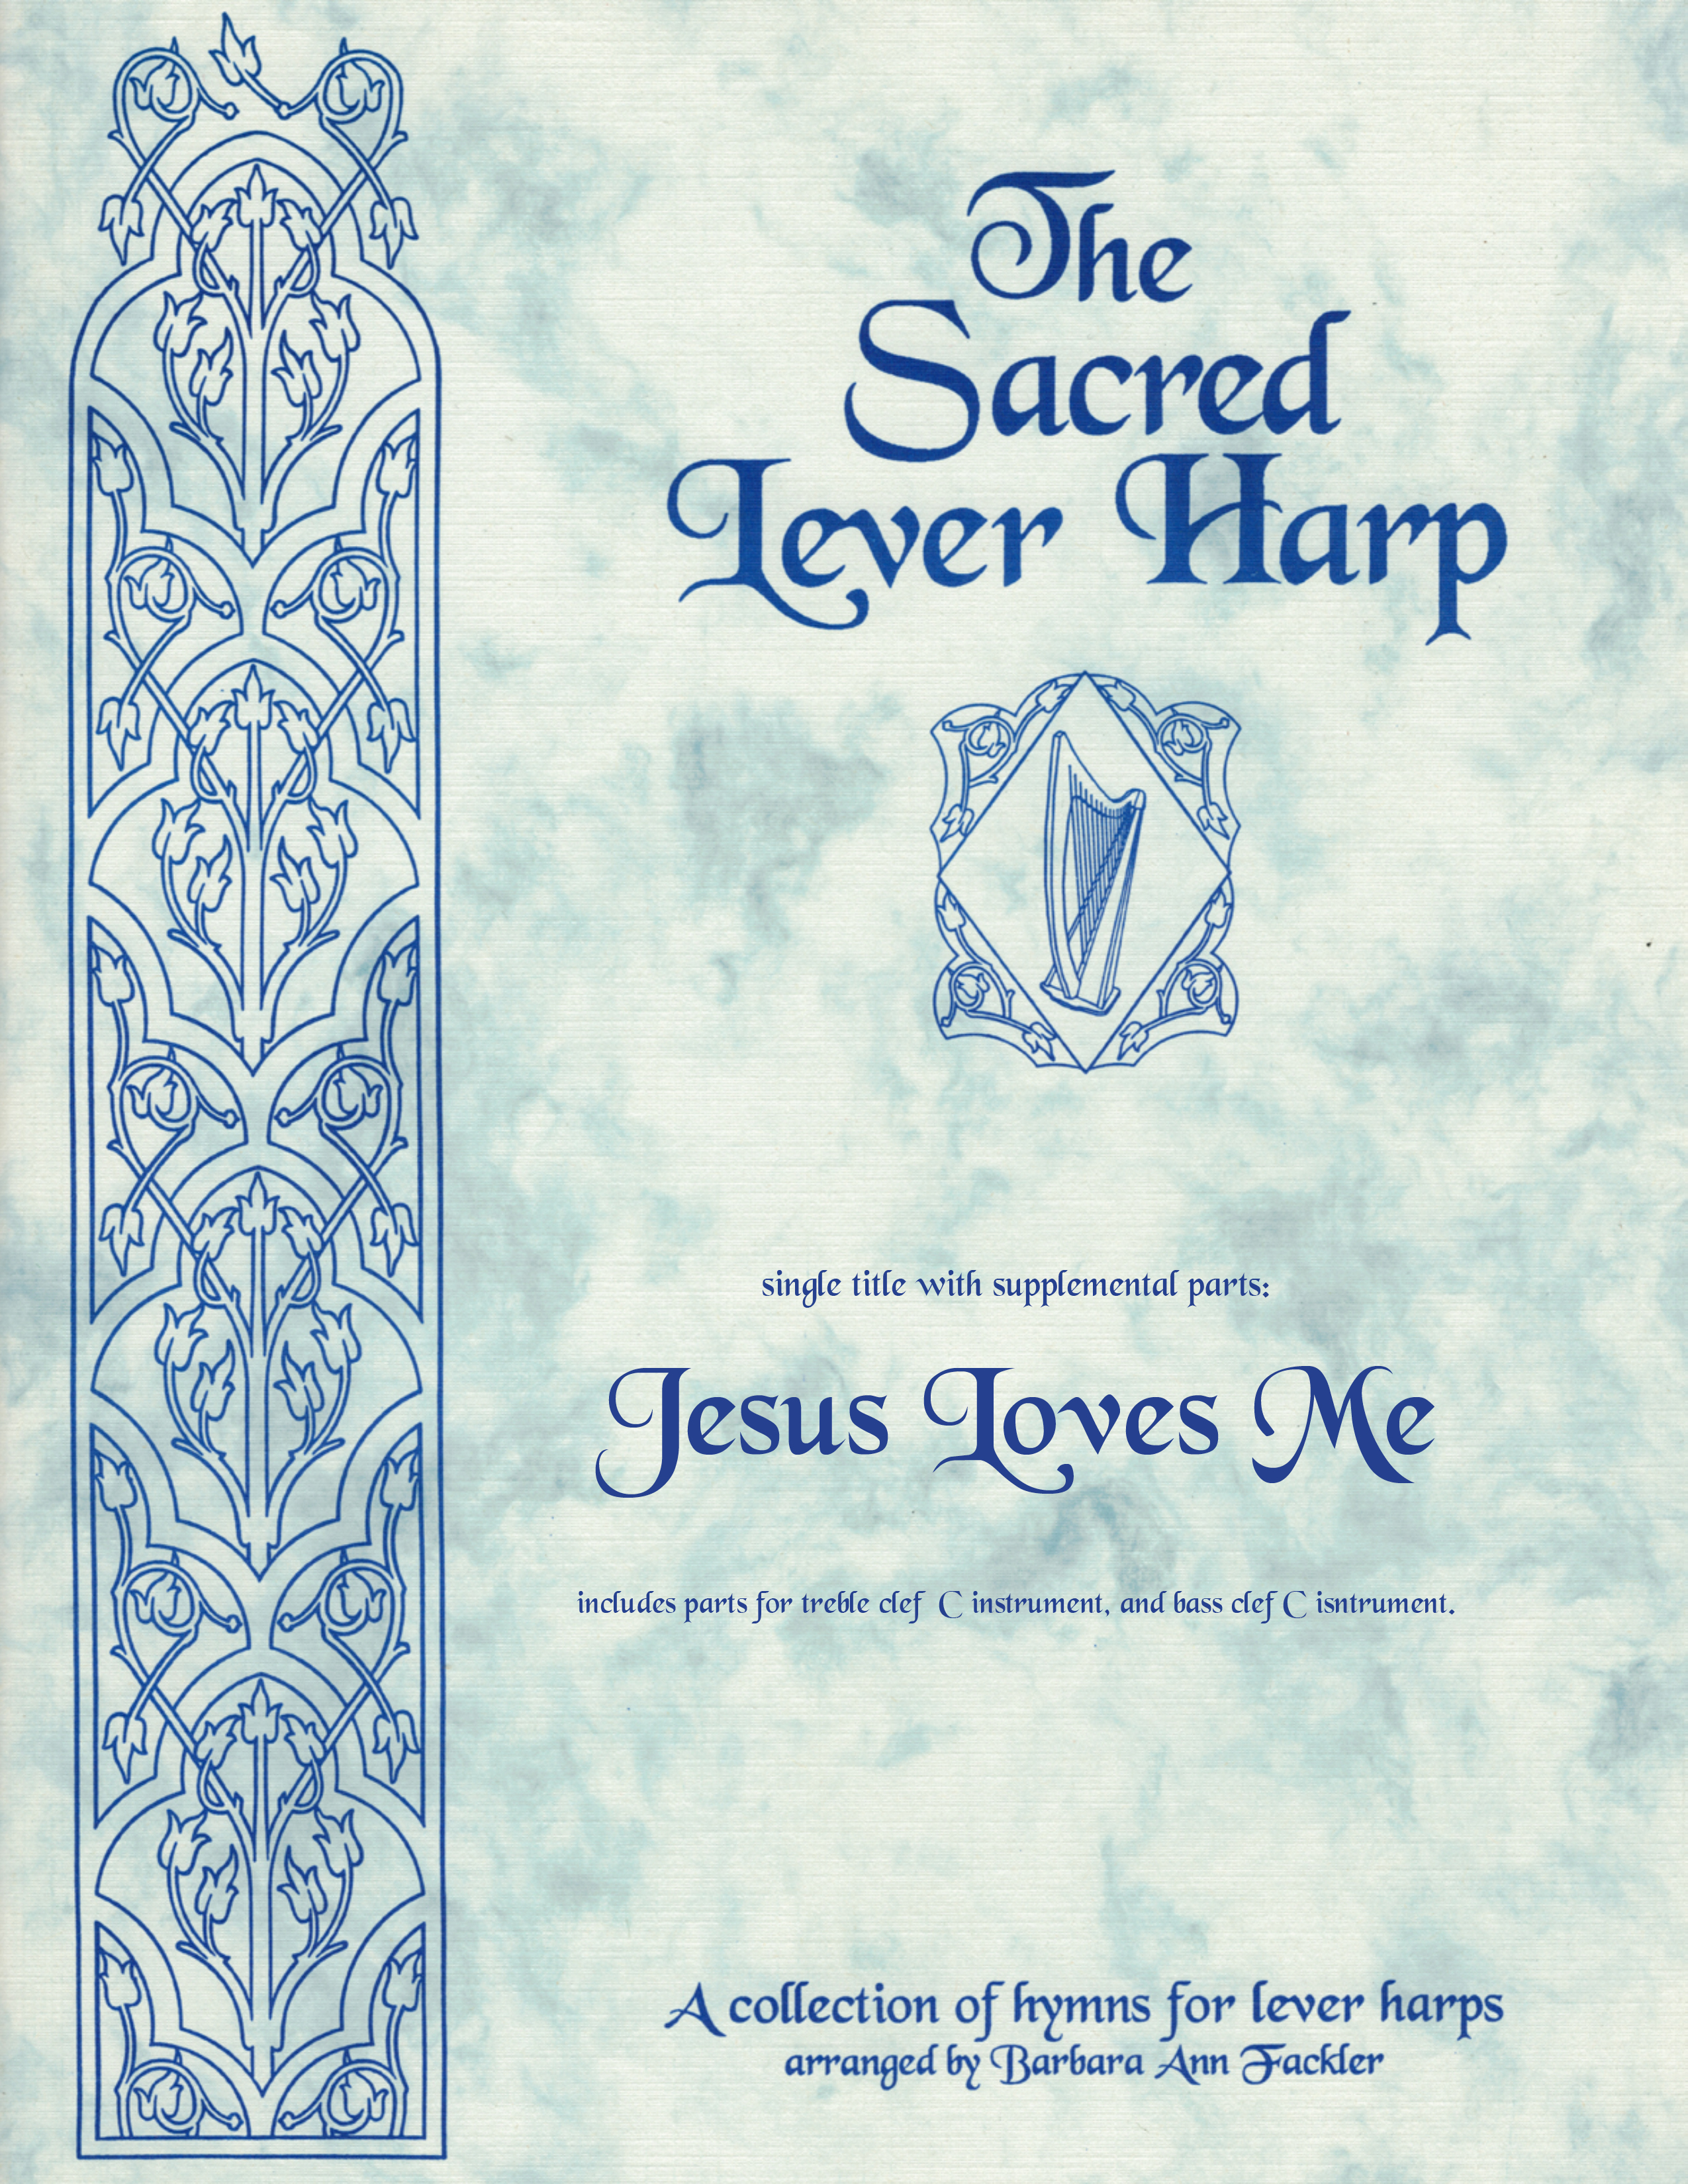 Jesus Loves Me by William B. Bradbury ~  sheet music for harp arranged by Barbara Ann Fackler